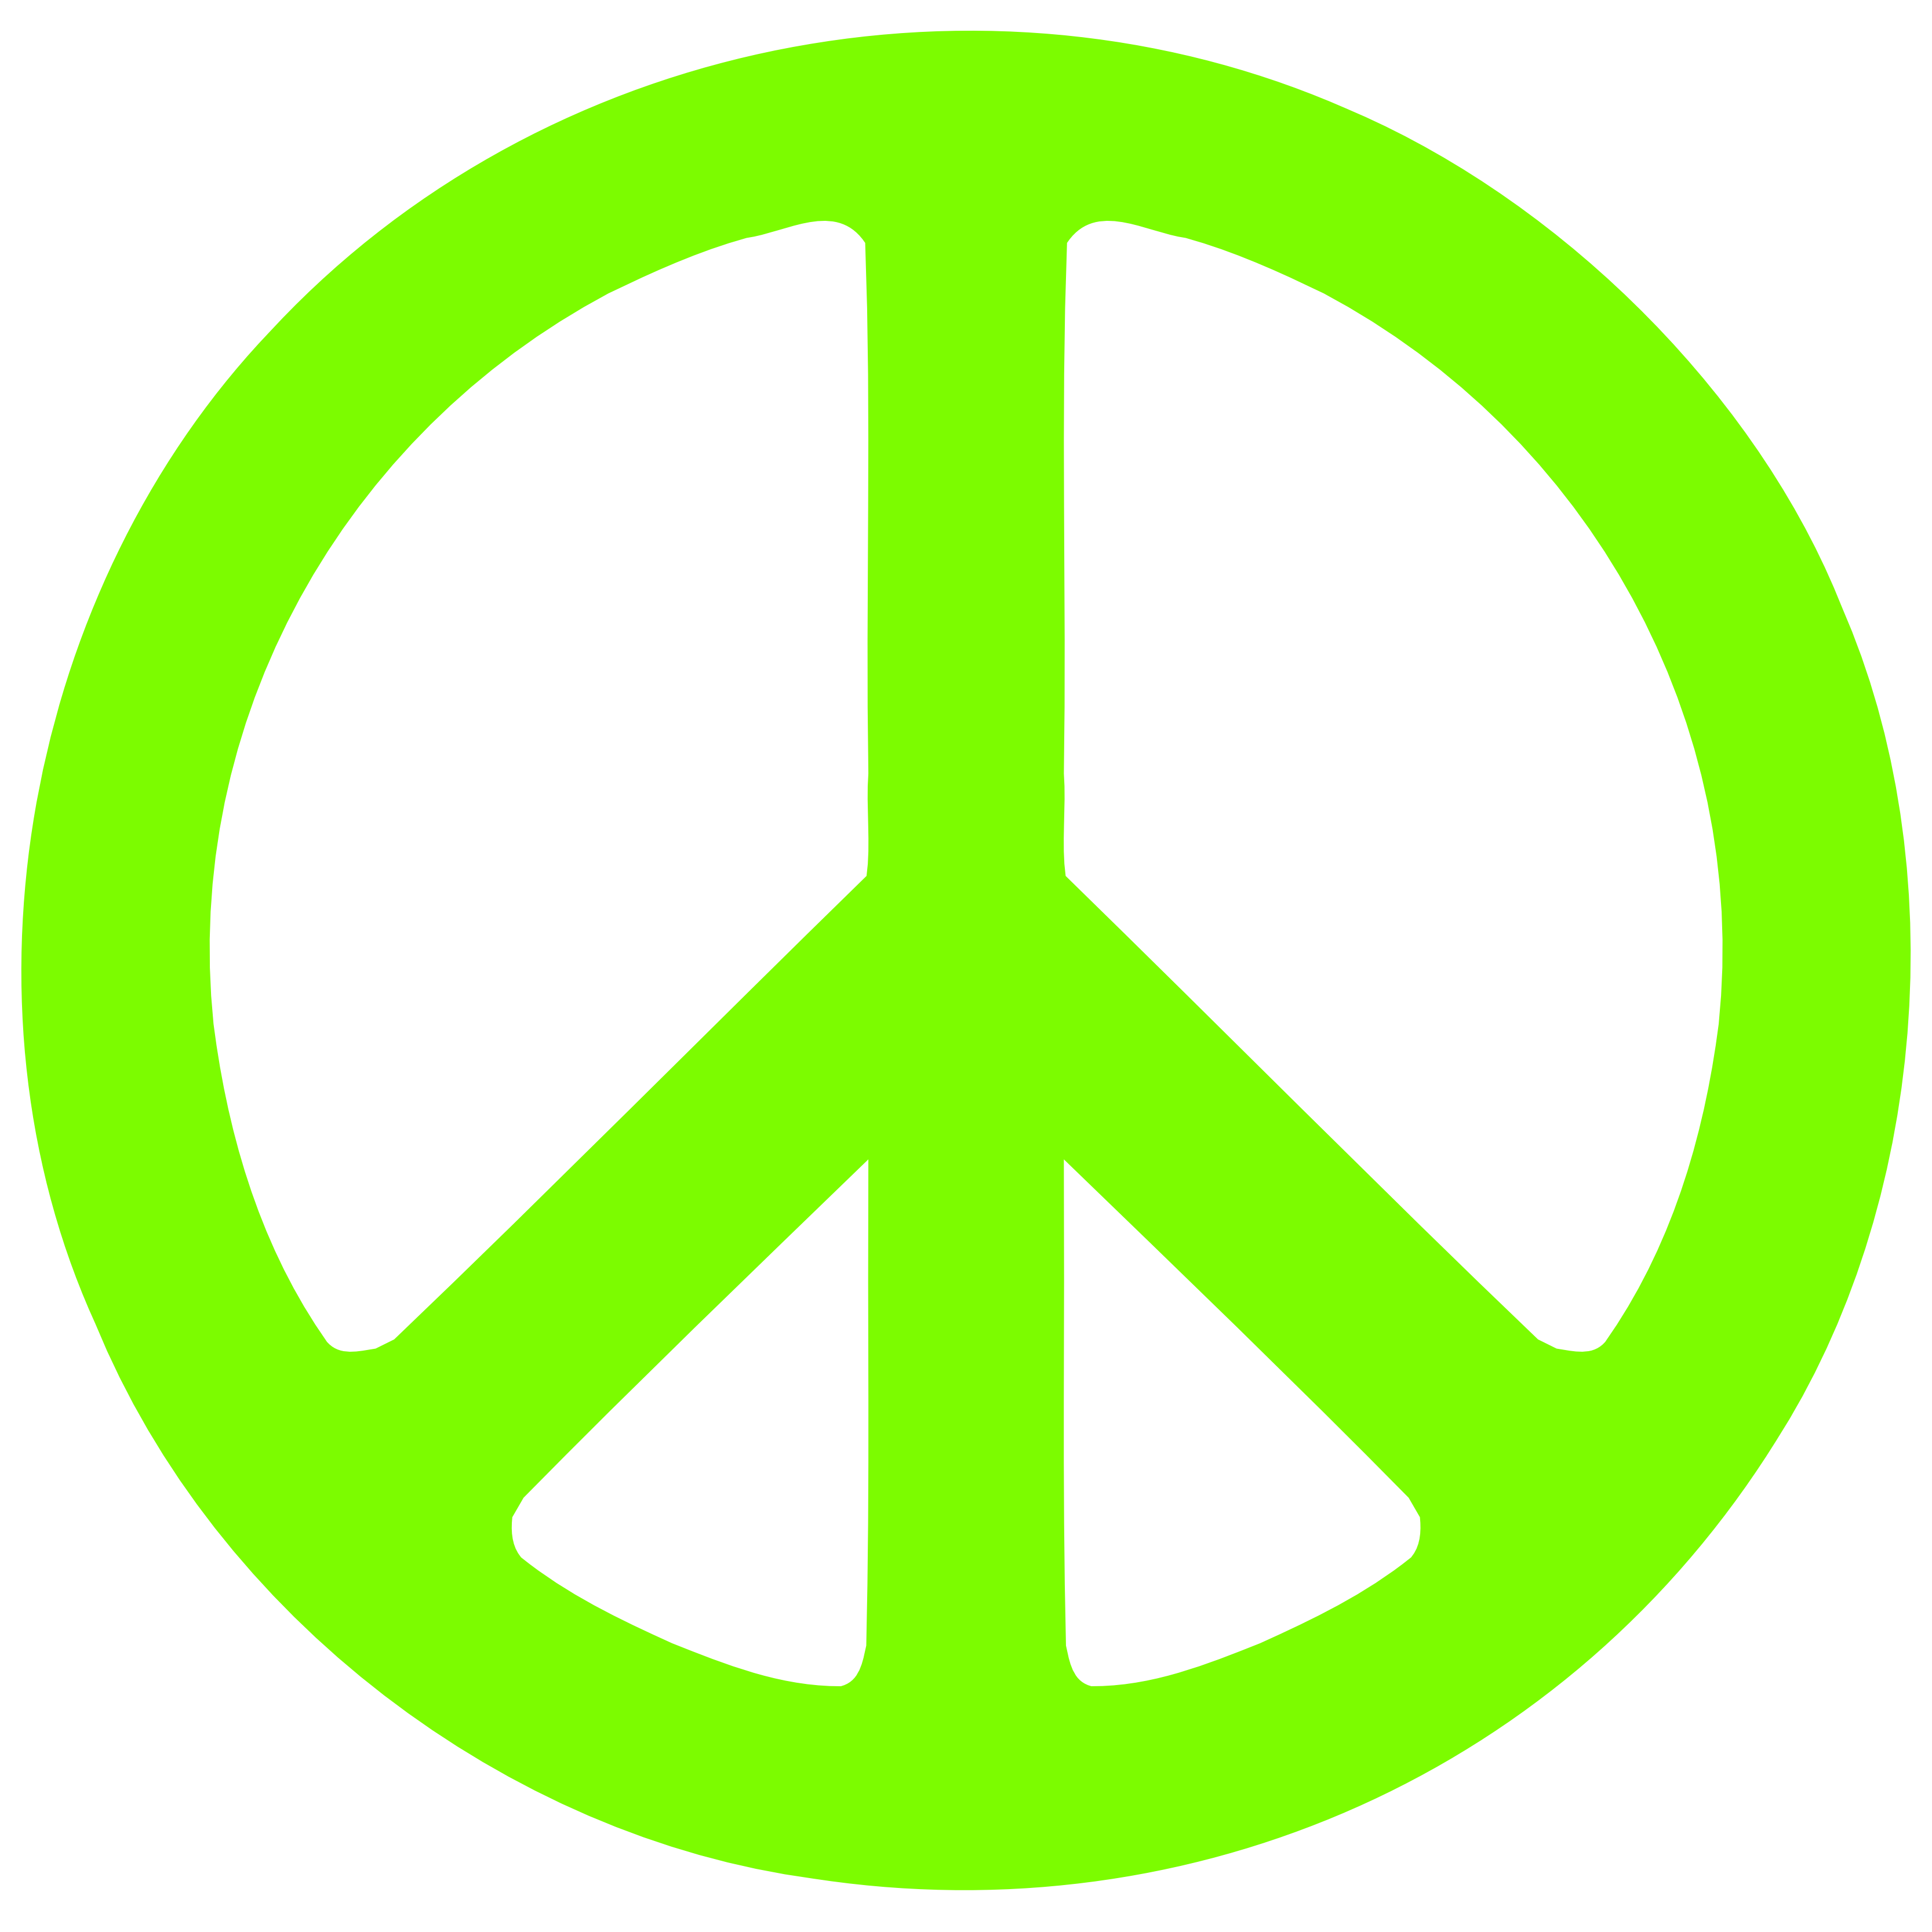 Lawn Green Peace Symbol 1 scallywag peacesymbol.org Peace Symbol ...